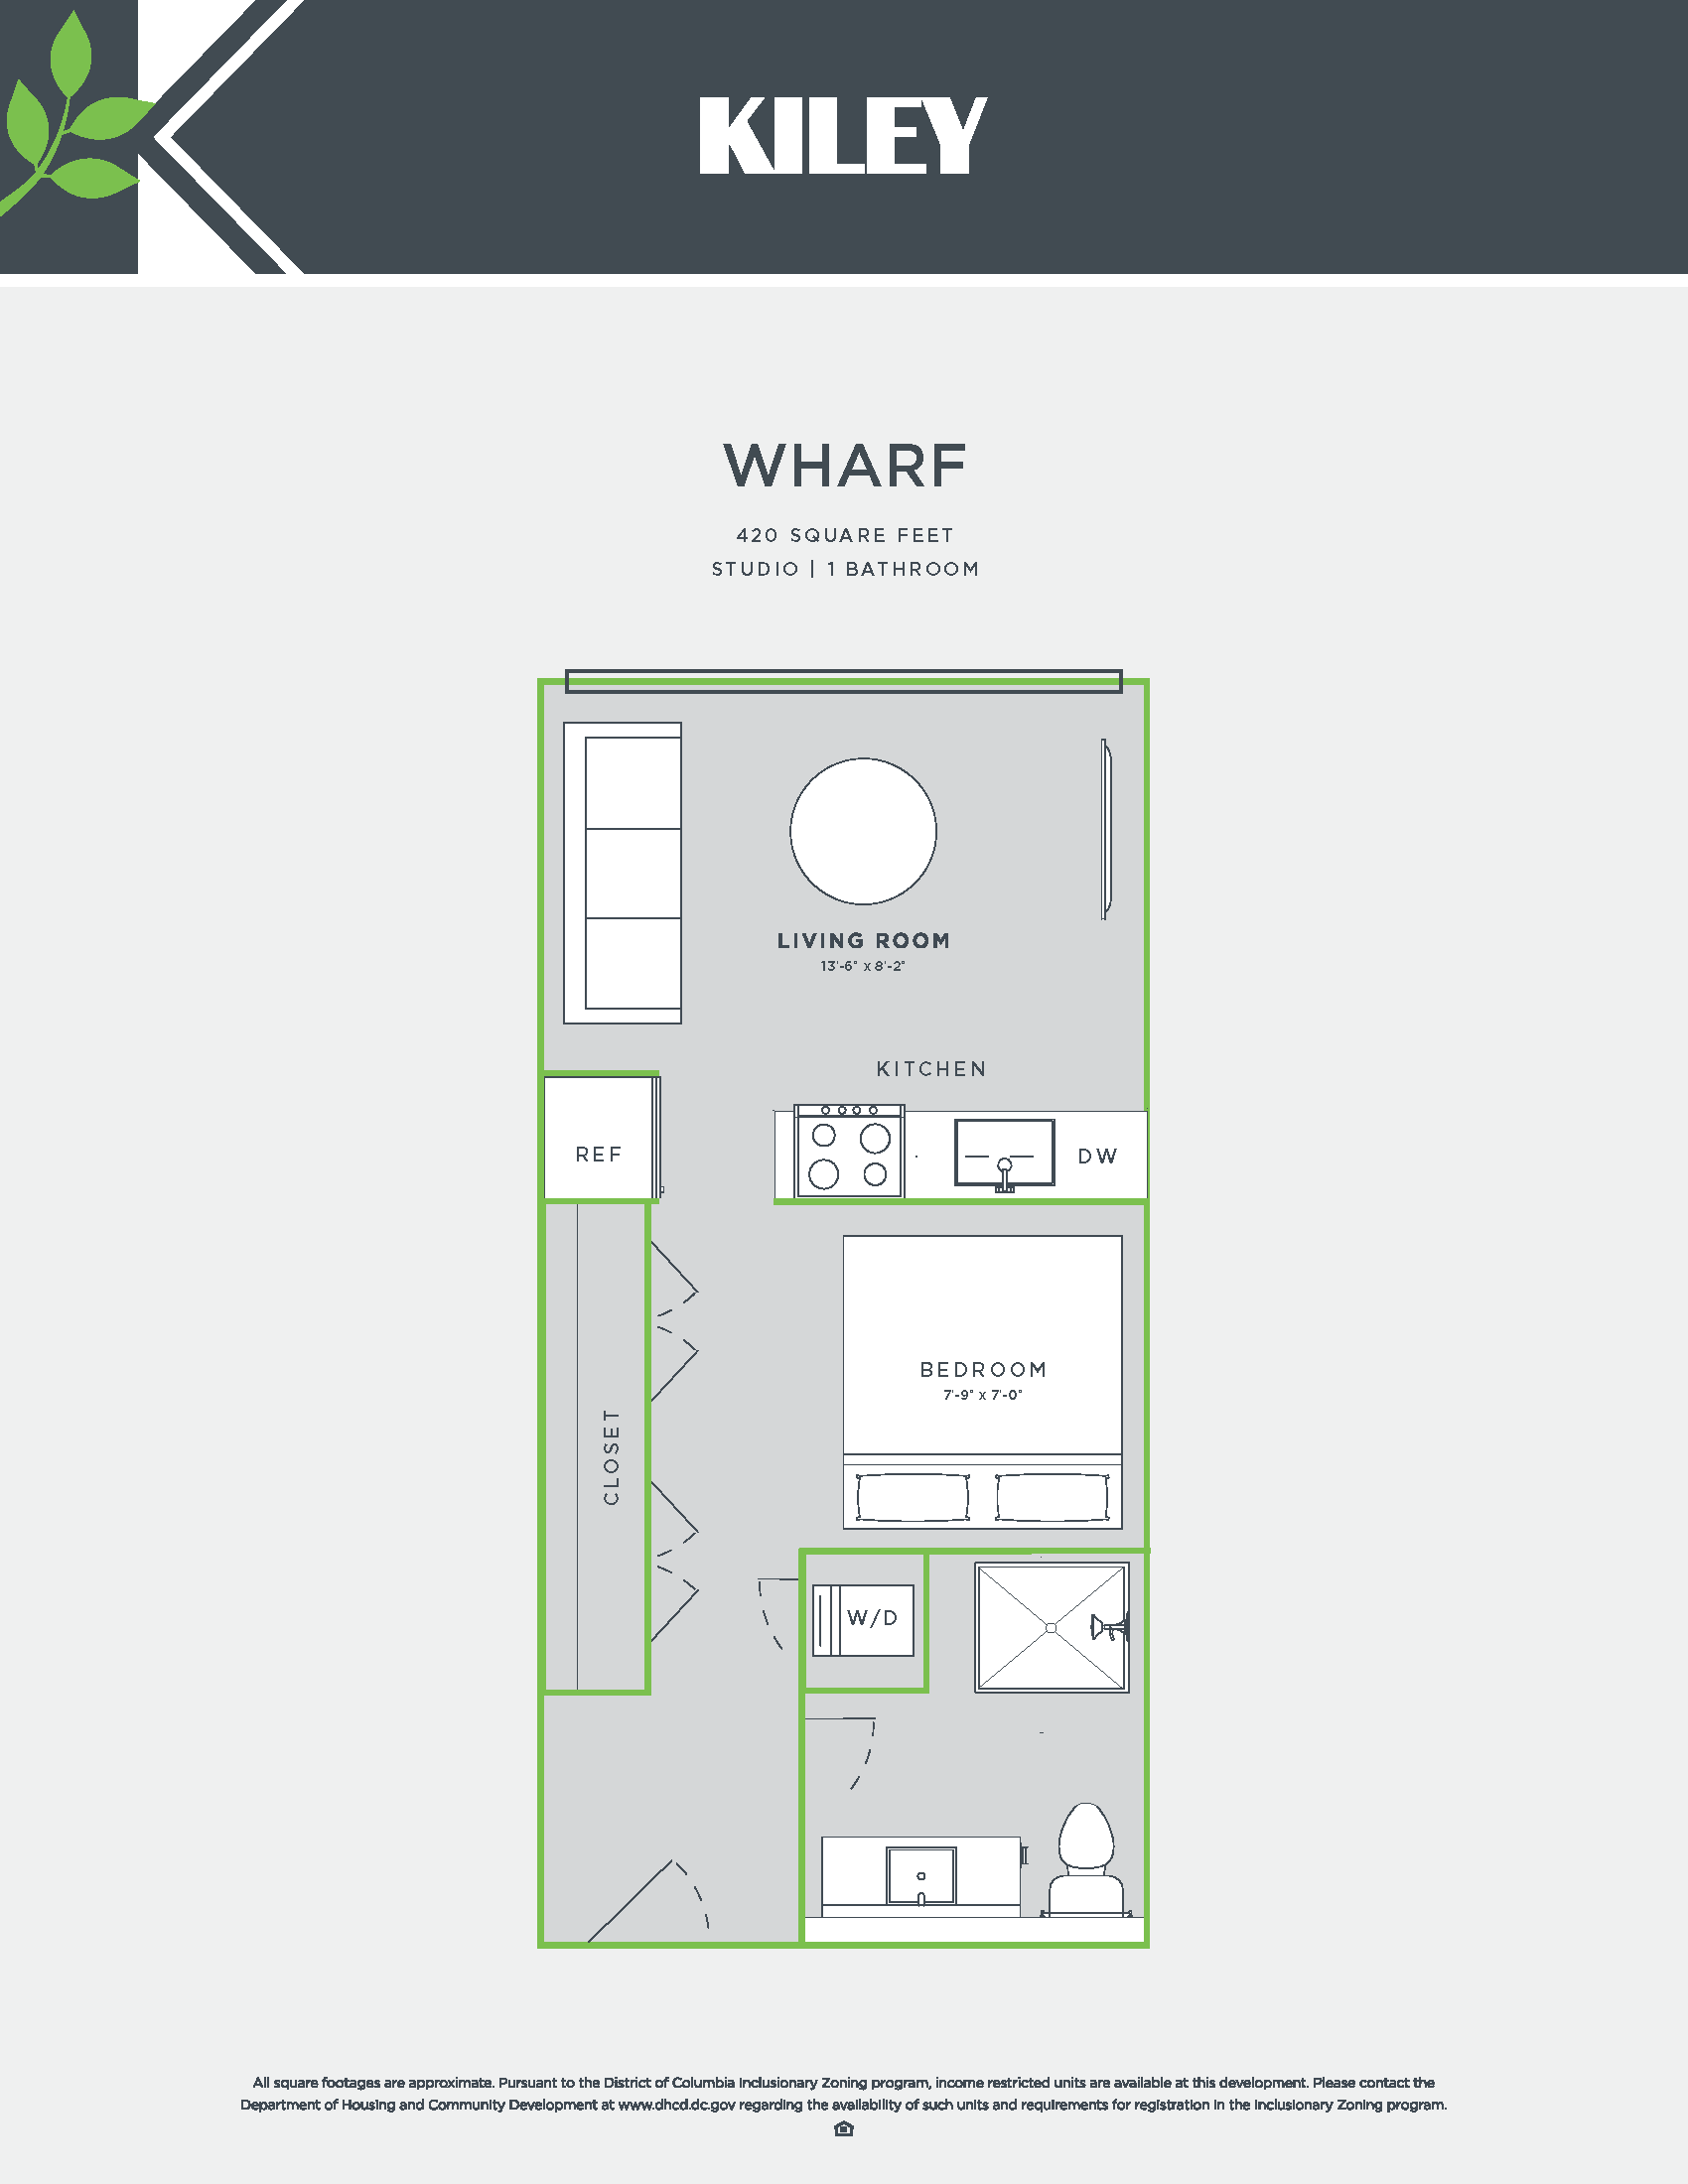 Wharf (studio /1 bath) Floor Plan